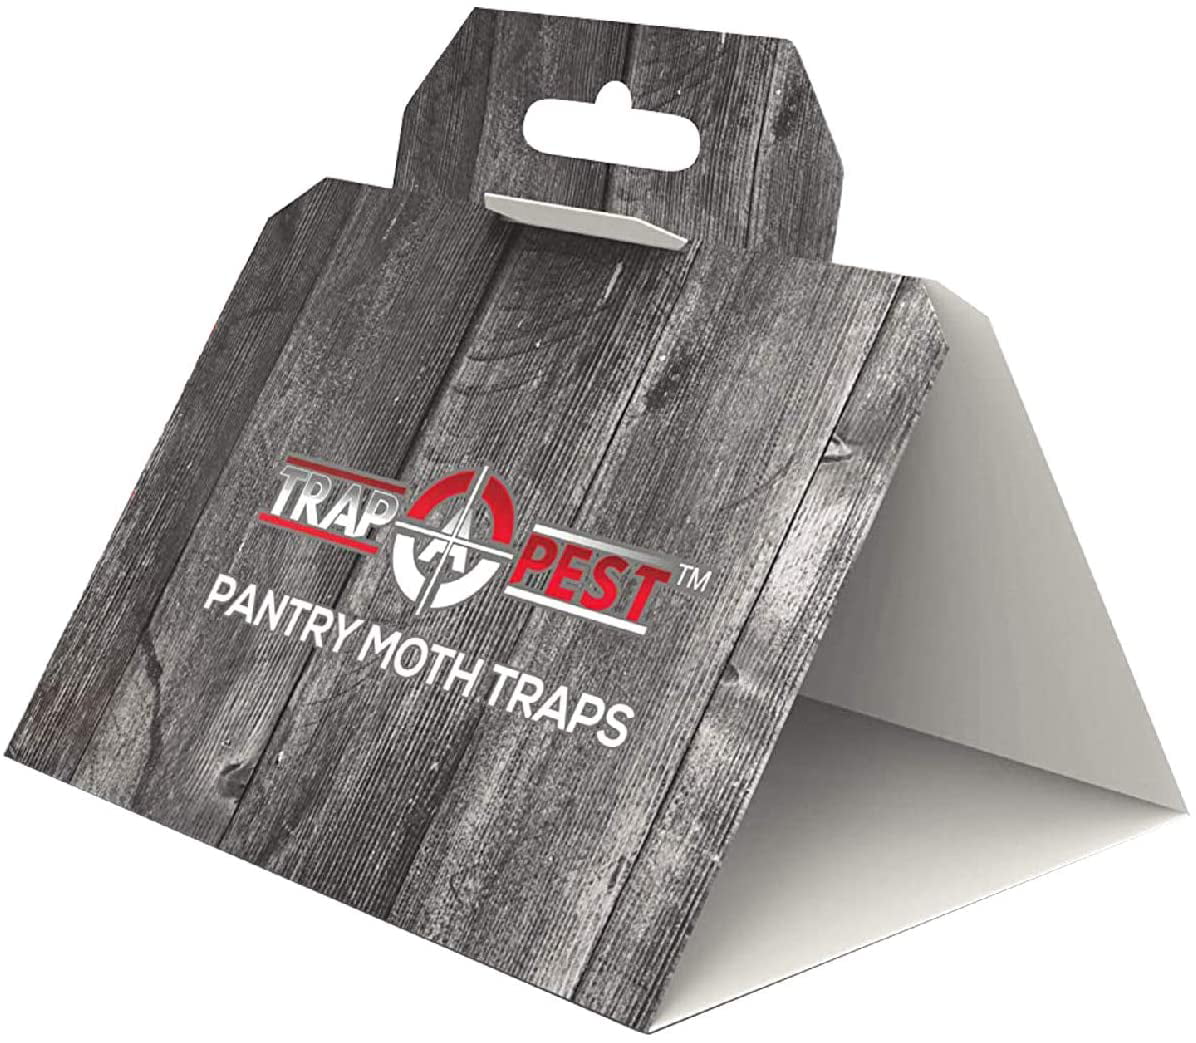 Moth Trap Special - 8 Moth Traps